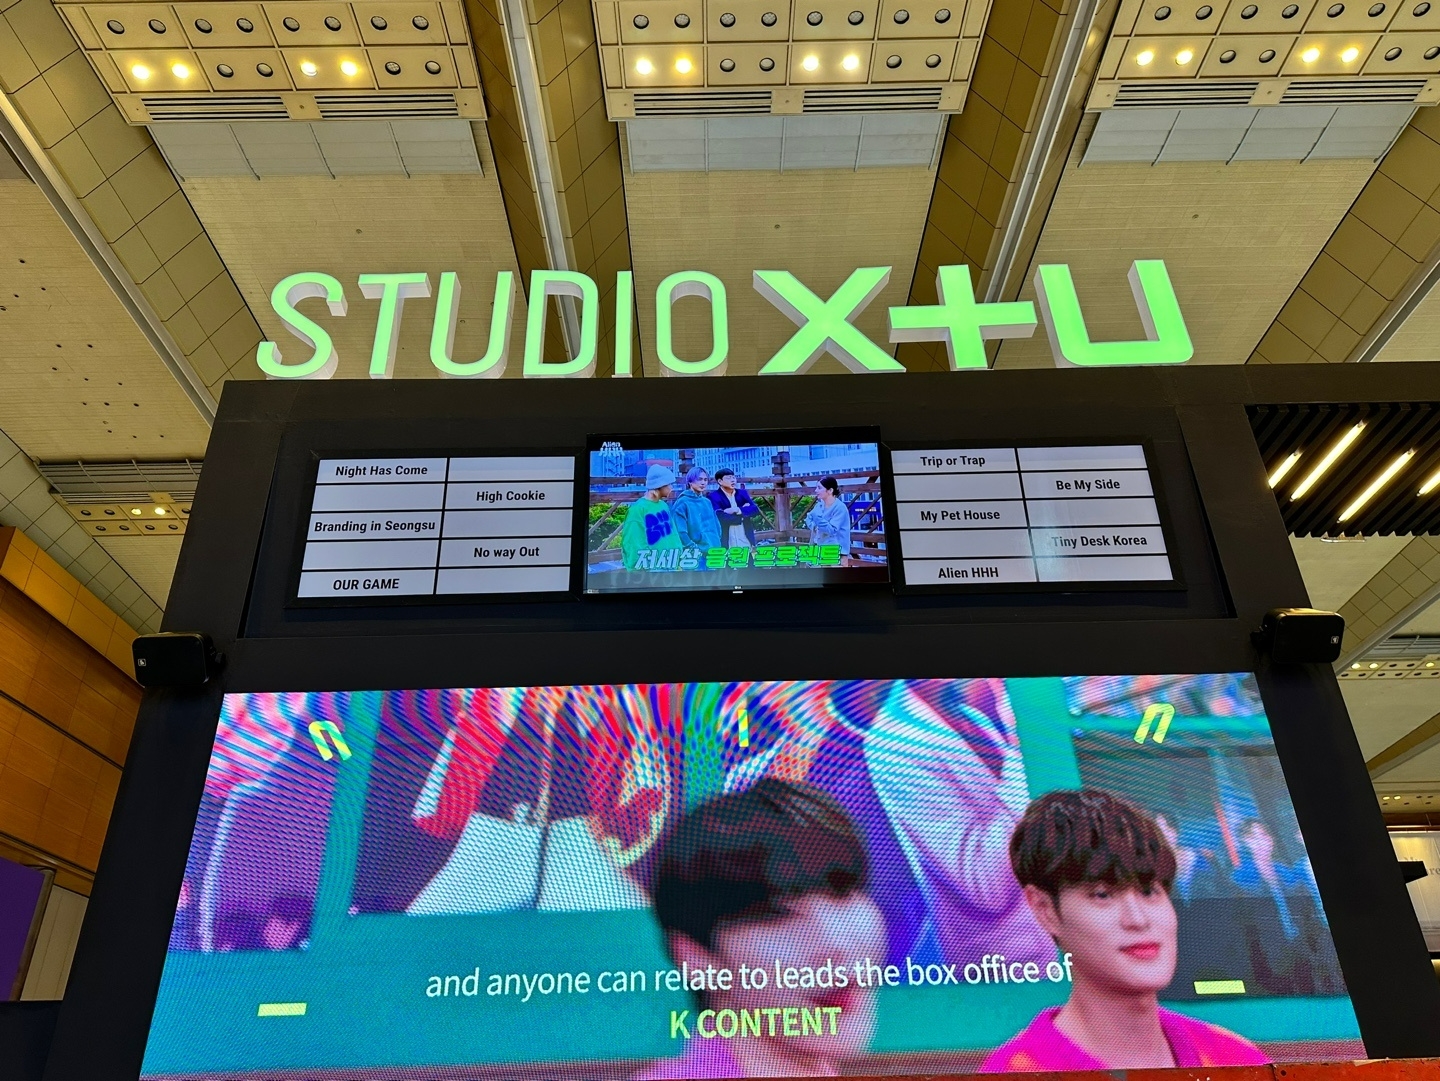 LG유플러스 콘텐츠 전문 스튜디오 'STUDIO X+U’가 서울 삼성동 코엑스에서 열리는 아시아 최대 규모 콘텐츠 마켓인 '국제방송영상마켓 2023'에 최초로 참여했다. 사진은 행사장 내 마련된 STUDIO X+U 부스 전경./사진제공=LG유플러스